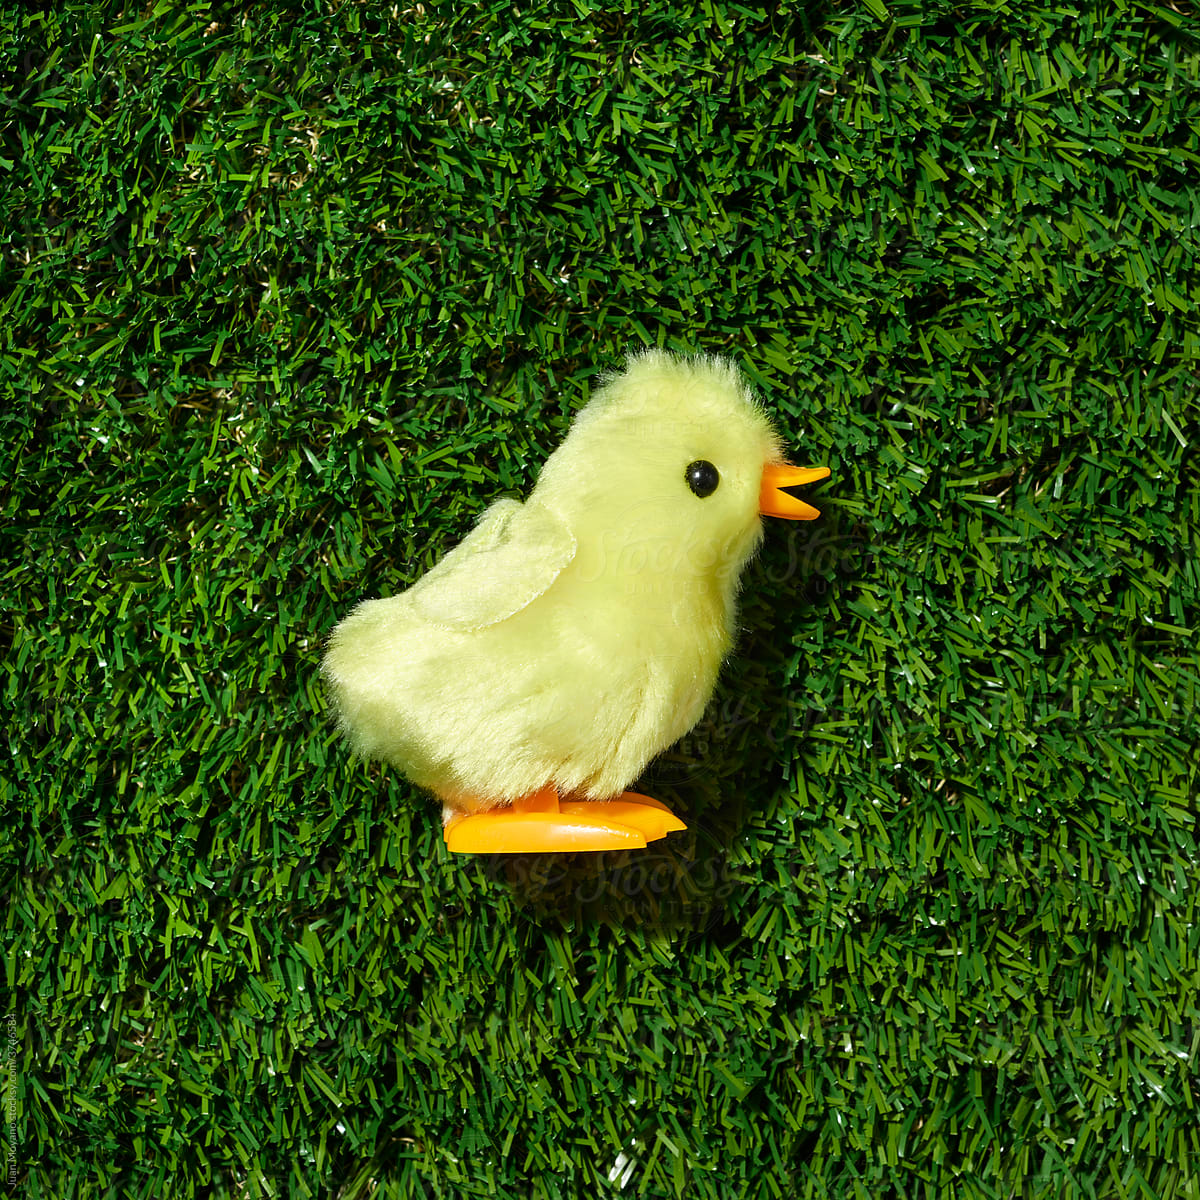 walking toy chicken on the grass